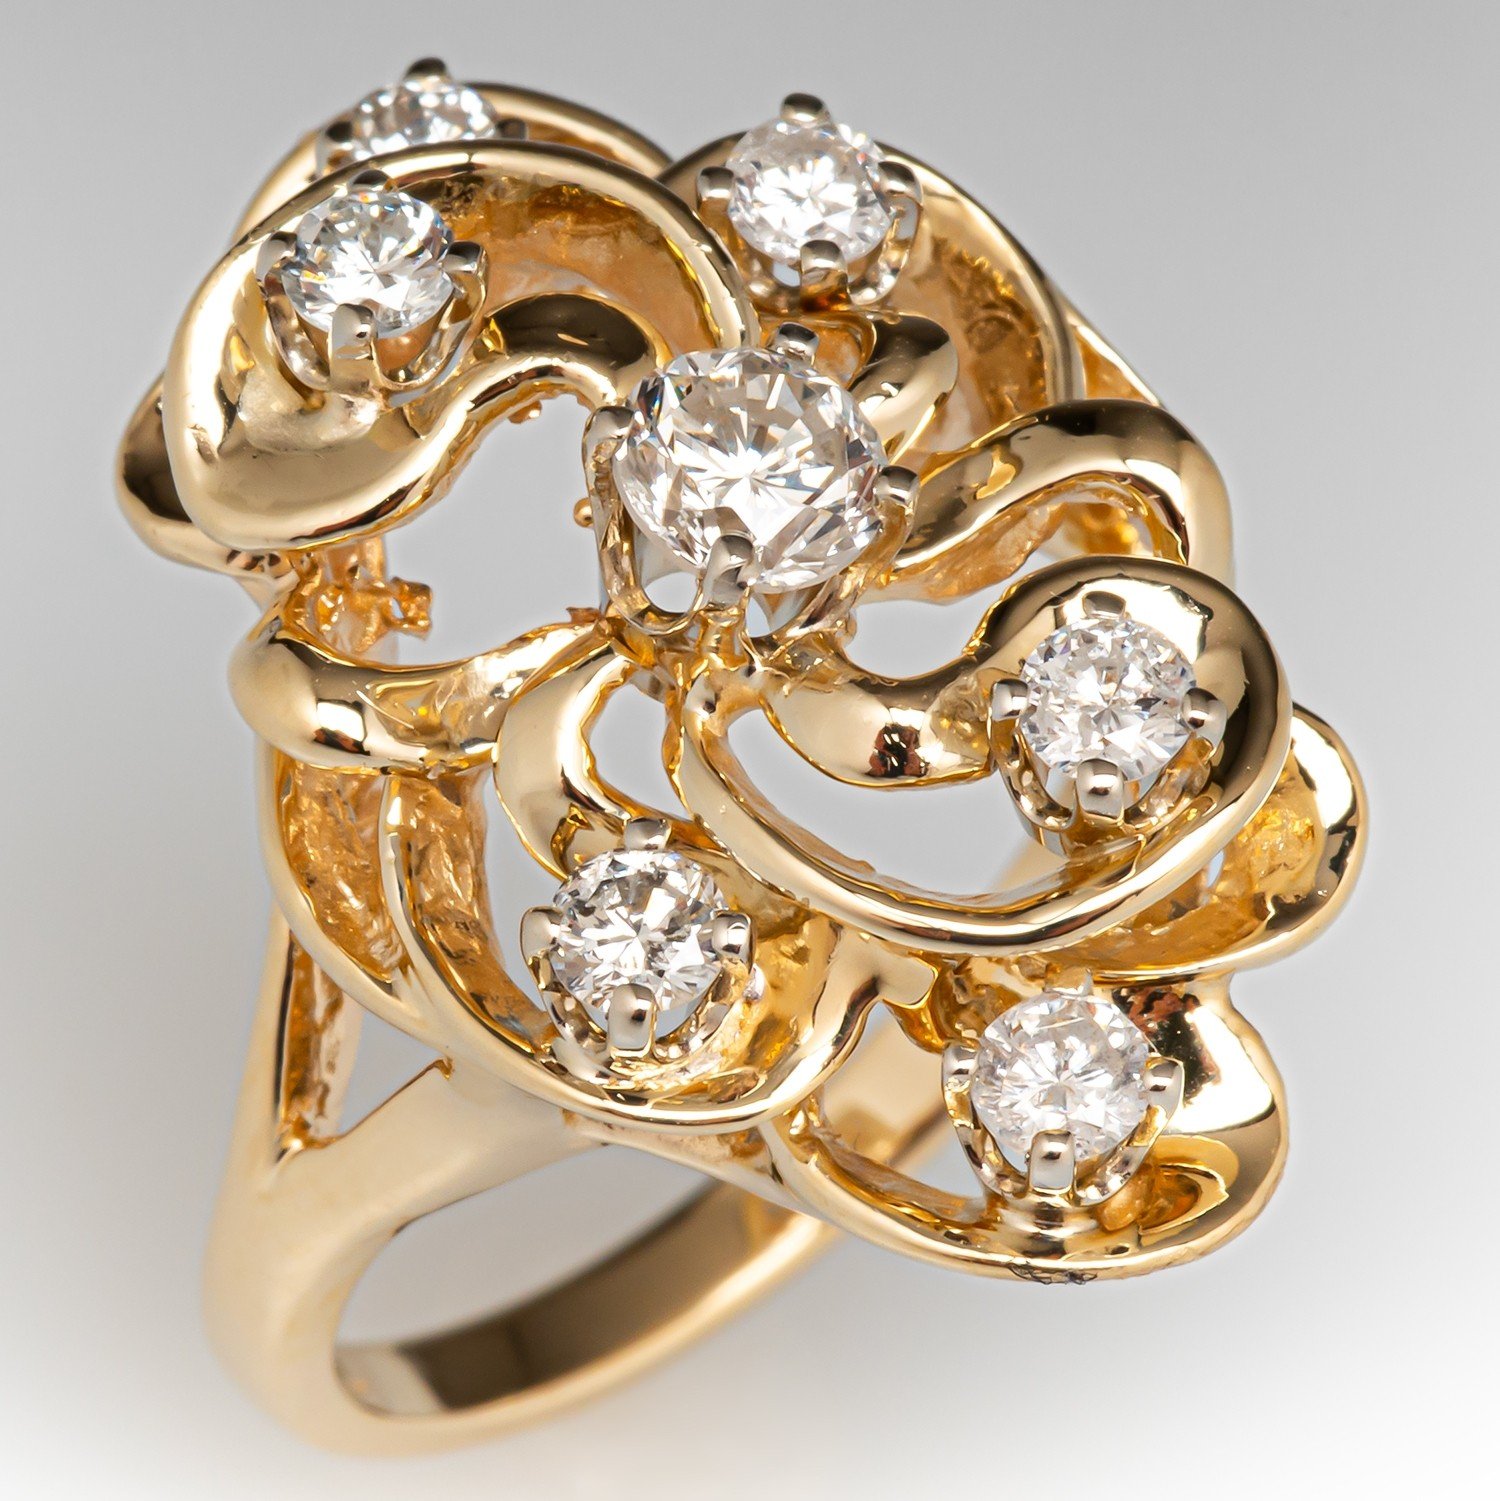 5 Beautiful Diamond & Sapphire Engagement Ring Designs